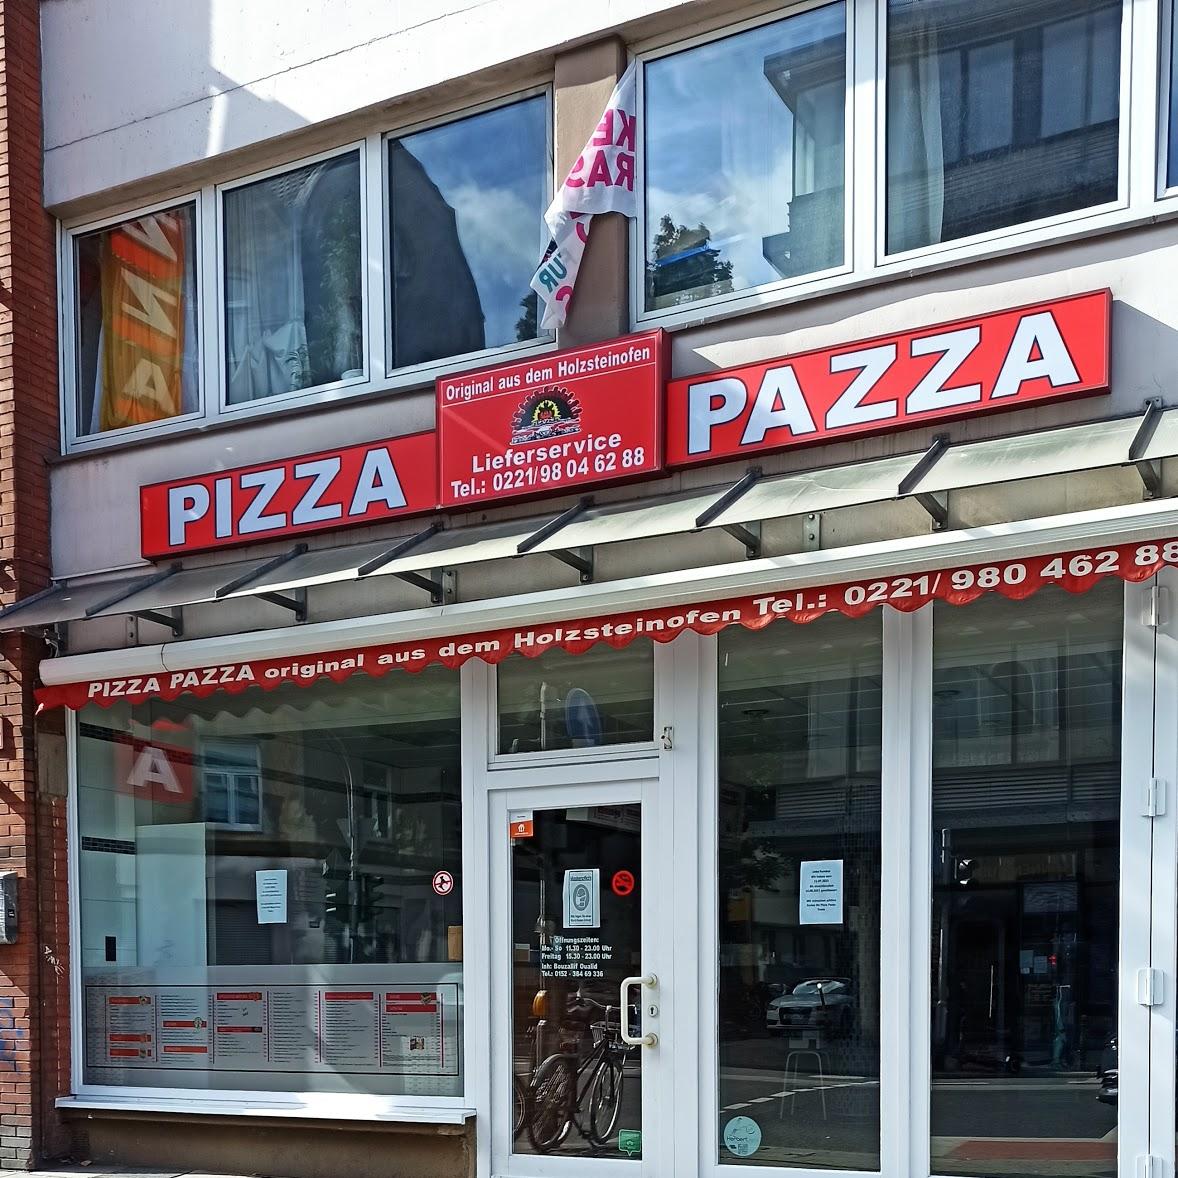 Restaurant "Pizza pazza" in Köln